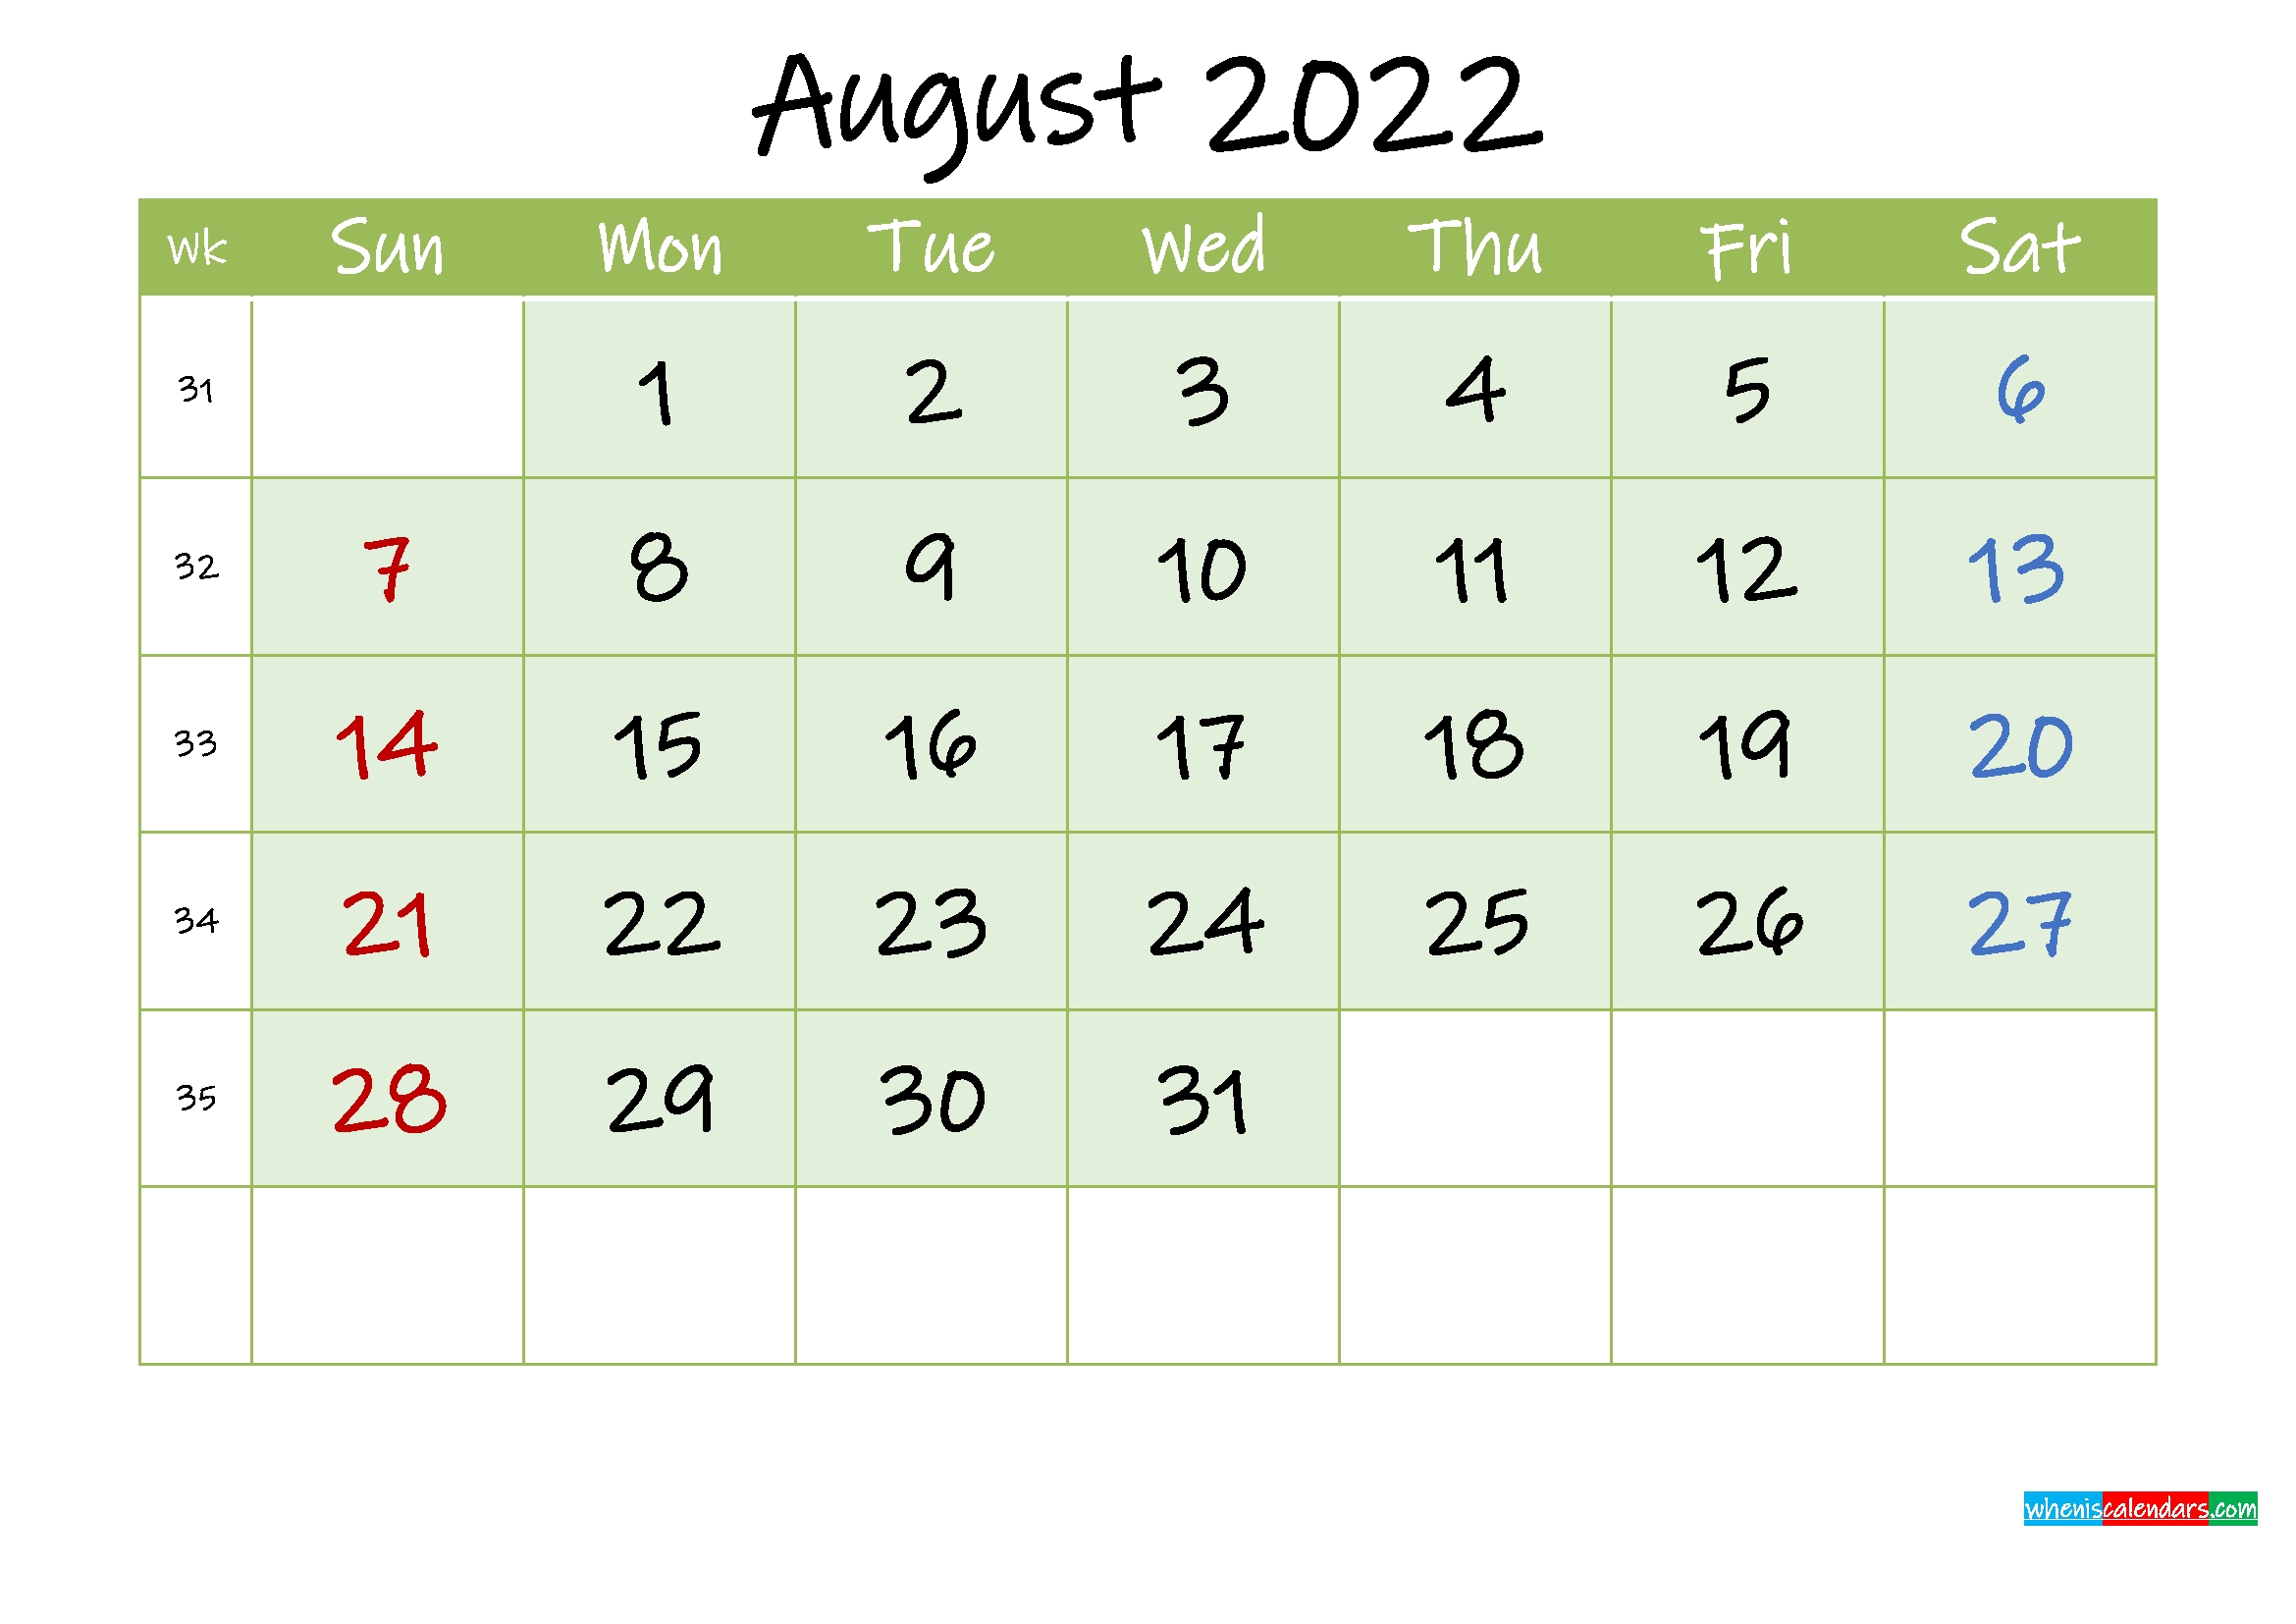 August 2022 Free Printable Calendar - Template Ink22M128